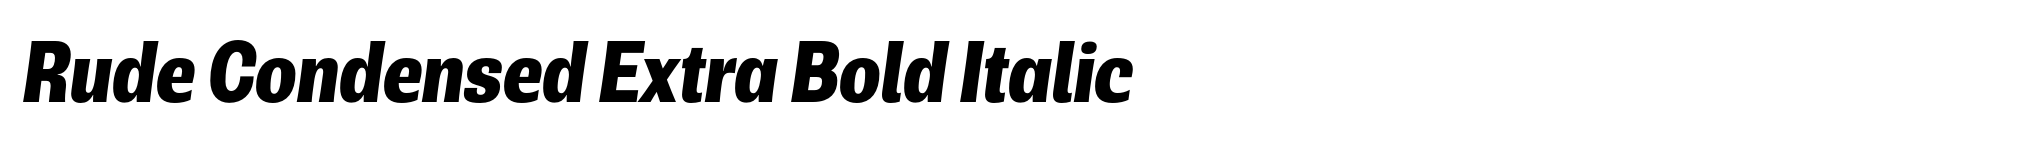 Rude Condensed Extra Bold Italic image